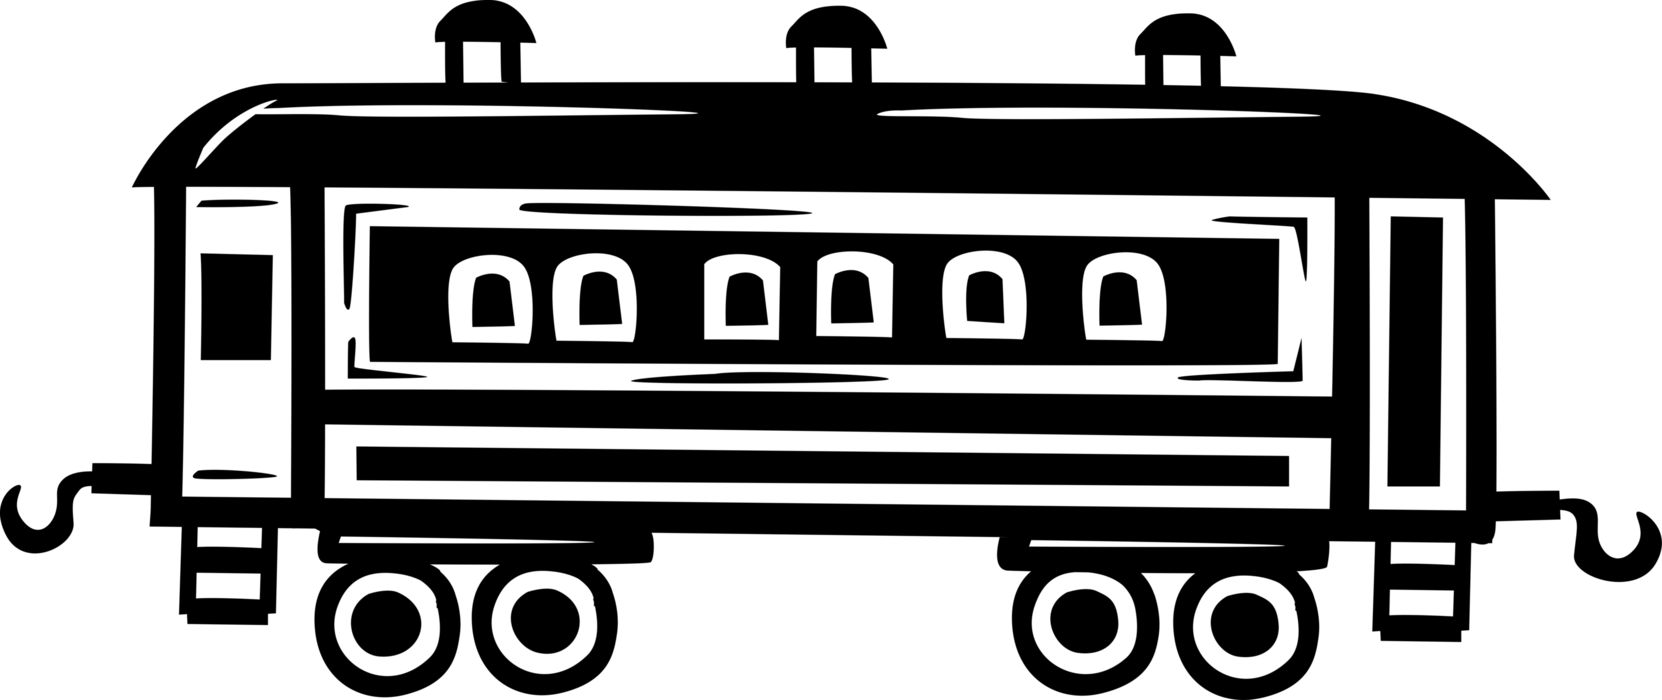 Vector Illustration of Rail Transportation Railway Train Car Carries Passengers